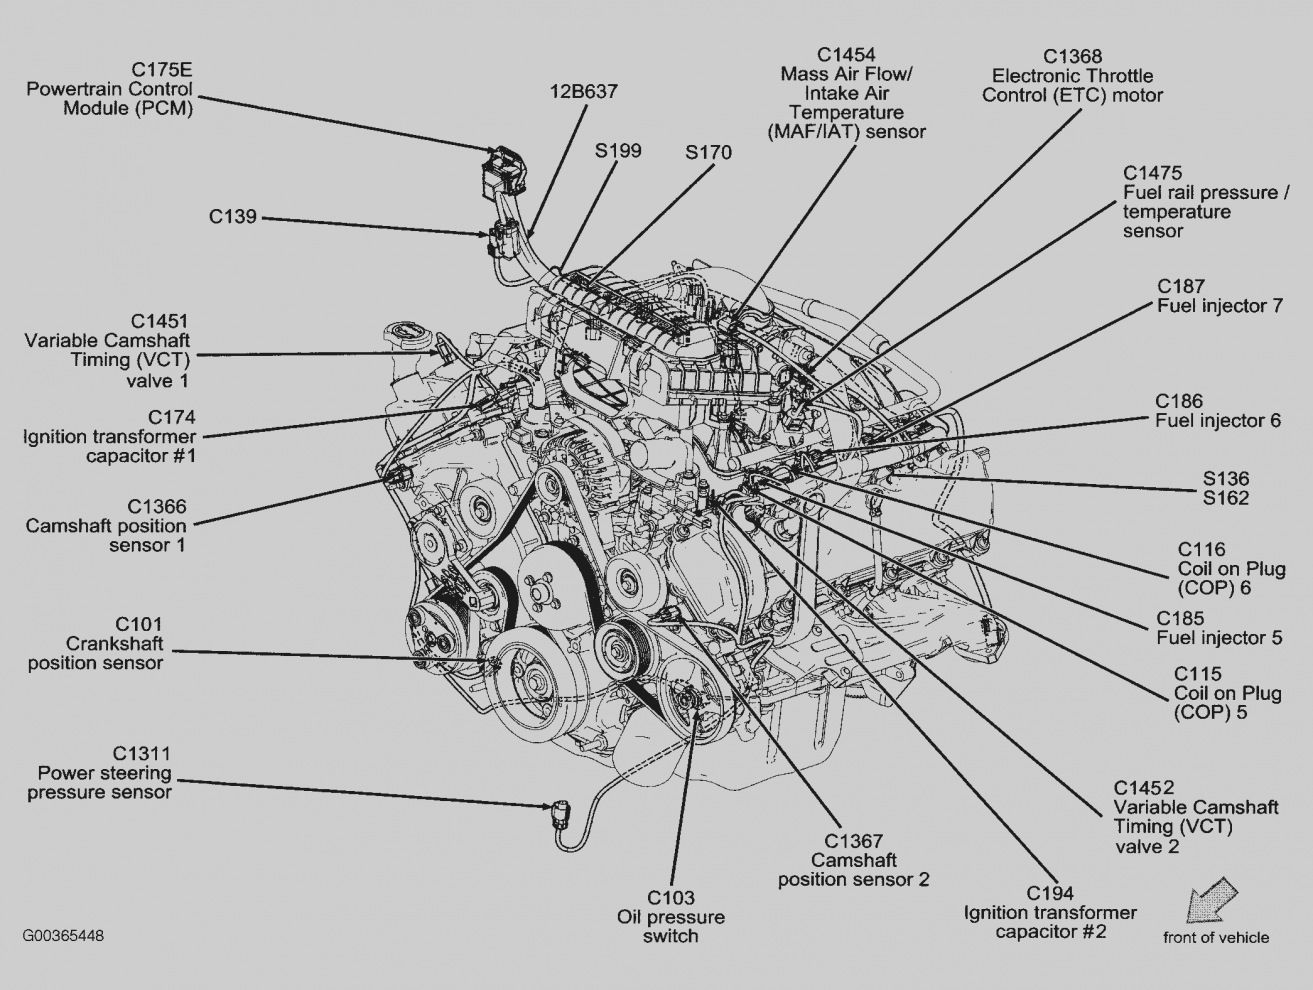 Diagram] 1992 F150 302 Exhaust Diagram Wiring Schematic Full